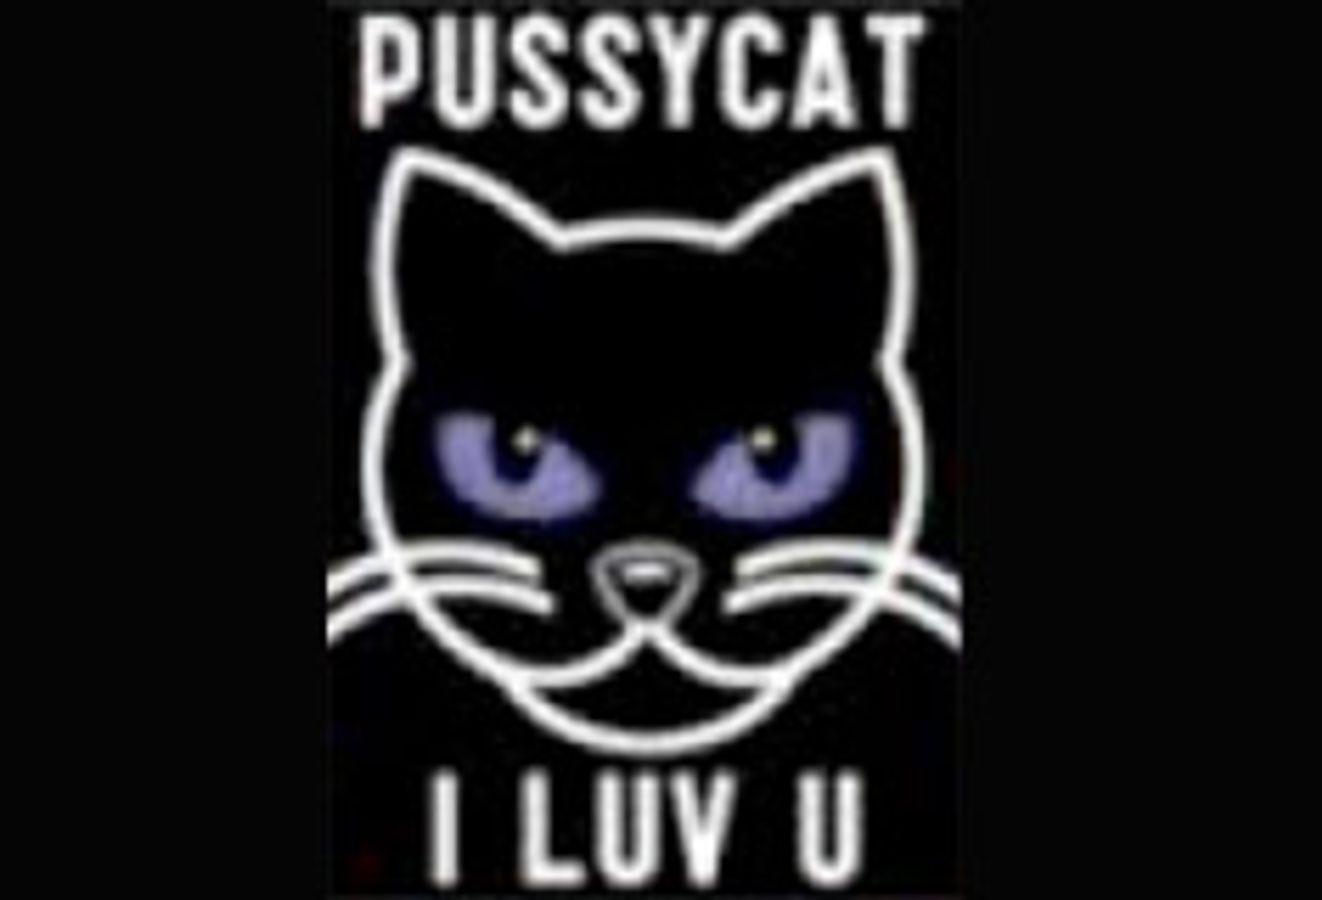 Pussycat I Love You